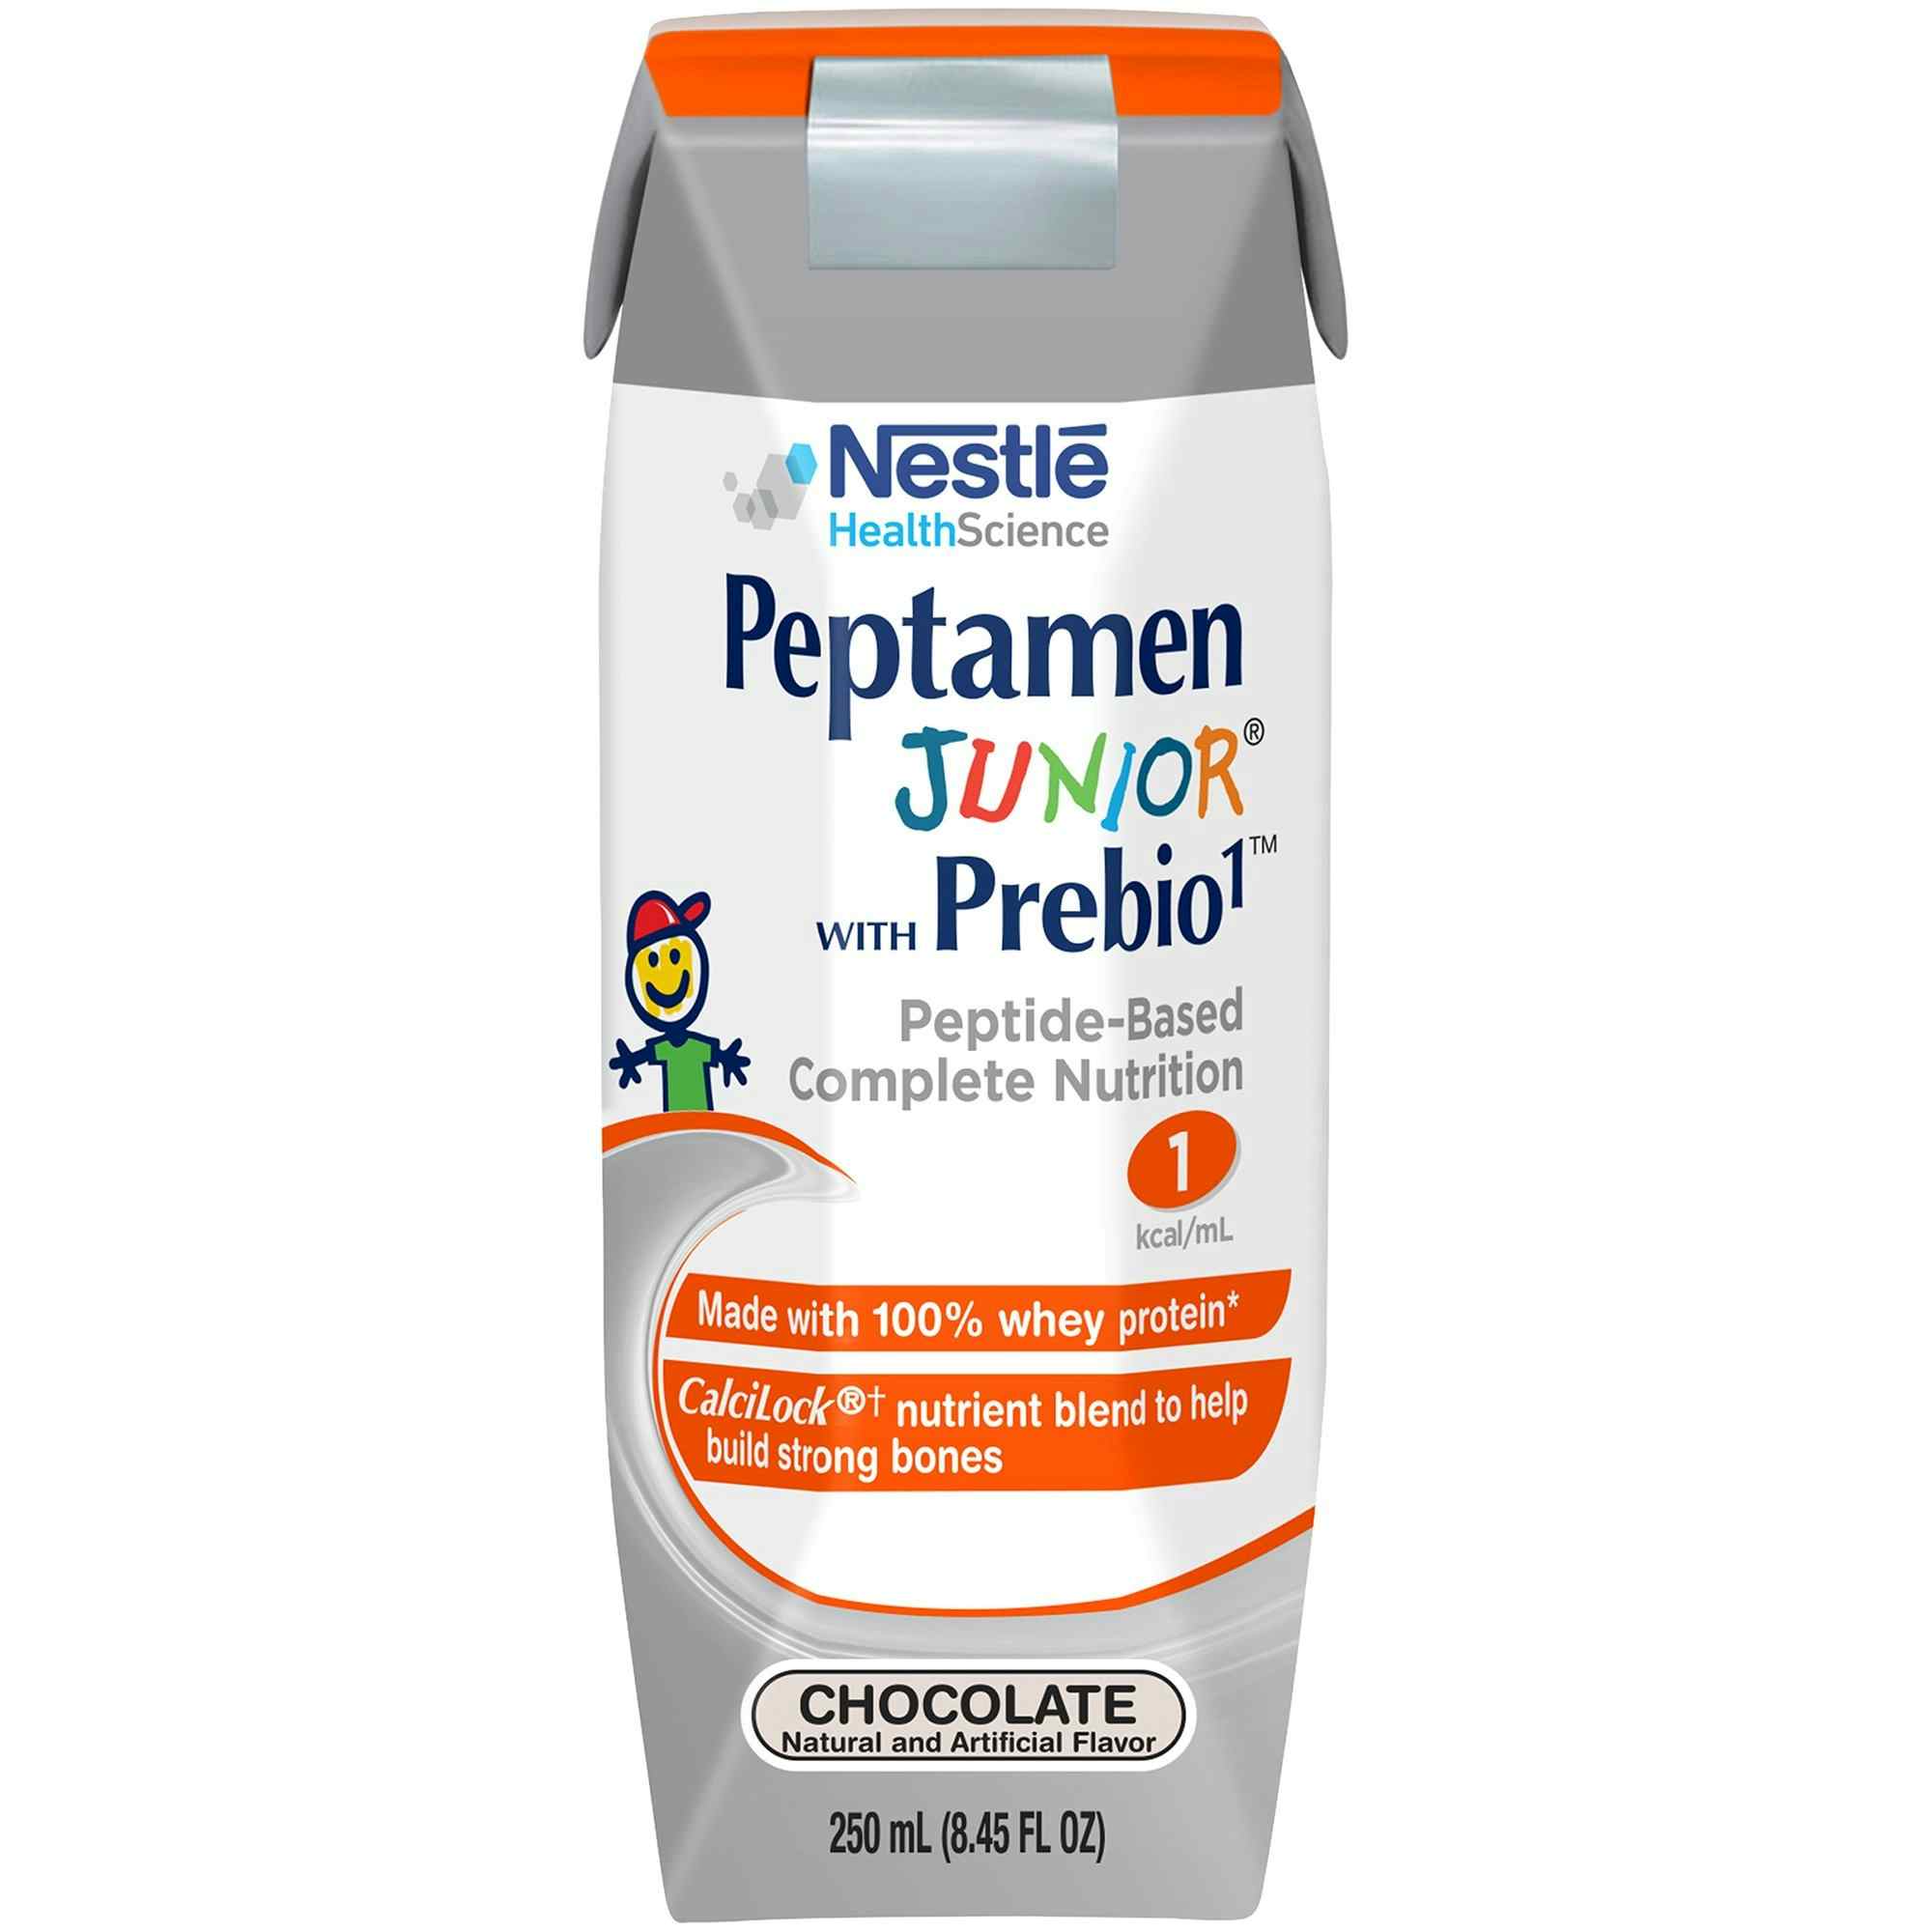 Nestle HealthScience Peptamen Junior with Prebio 1 Peptide-Based Nutritionally Complete Formula, Chocolate, 8.45 oz., 00798716364164, 1 Each